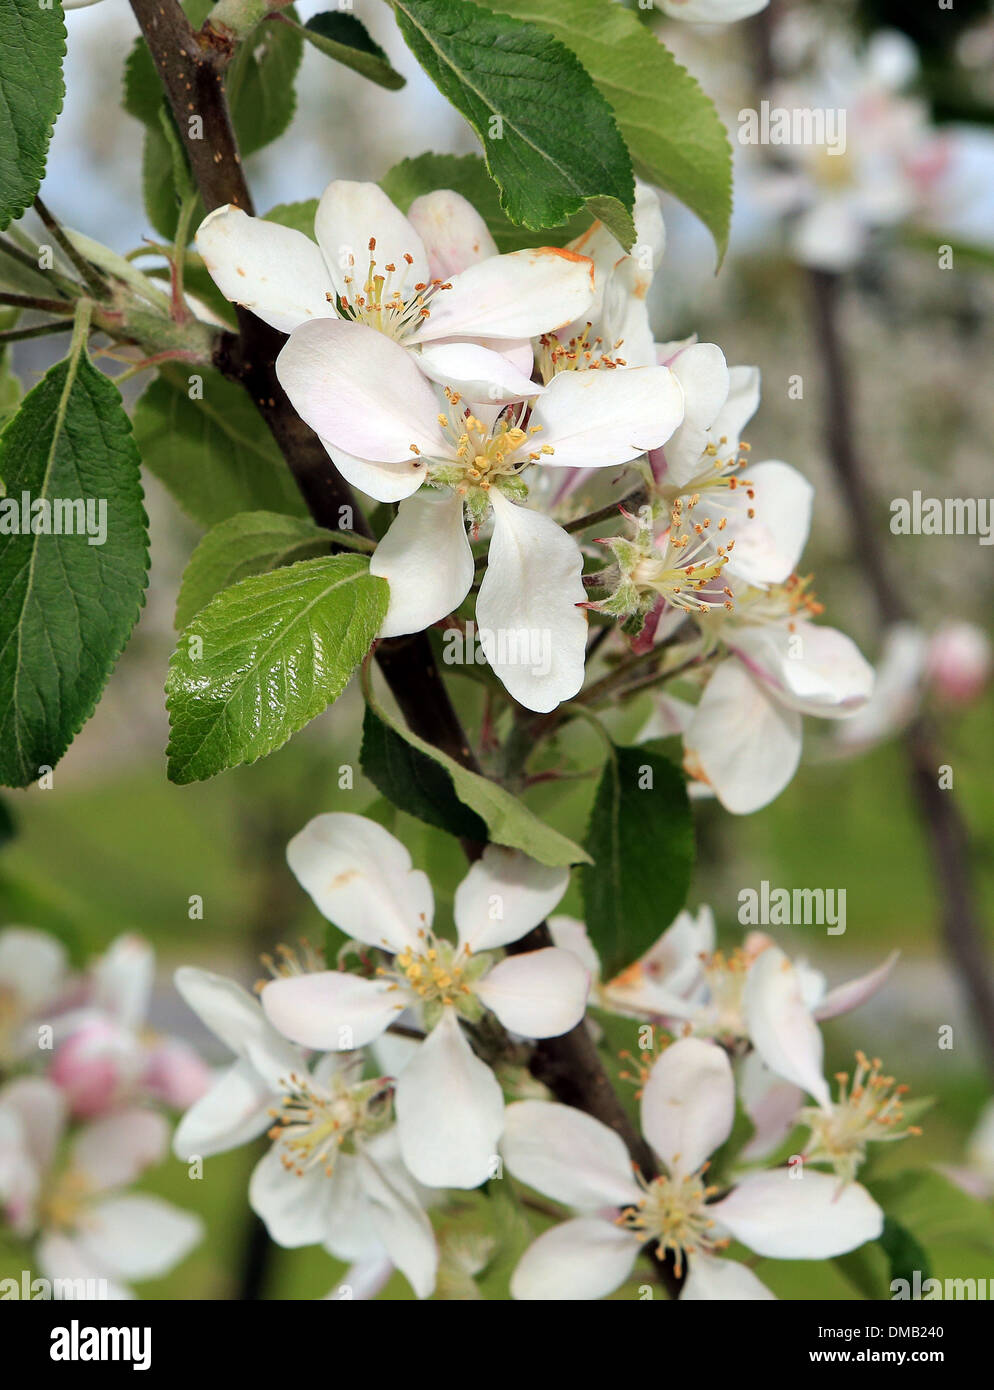 Apple blossom for cider making. Stock Photo